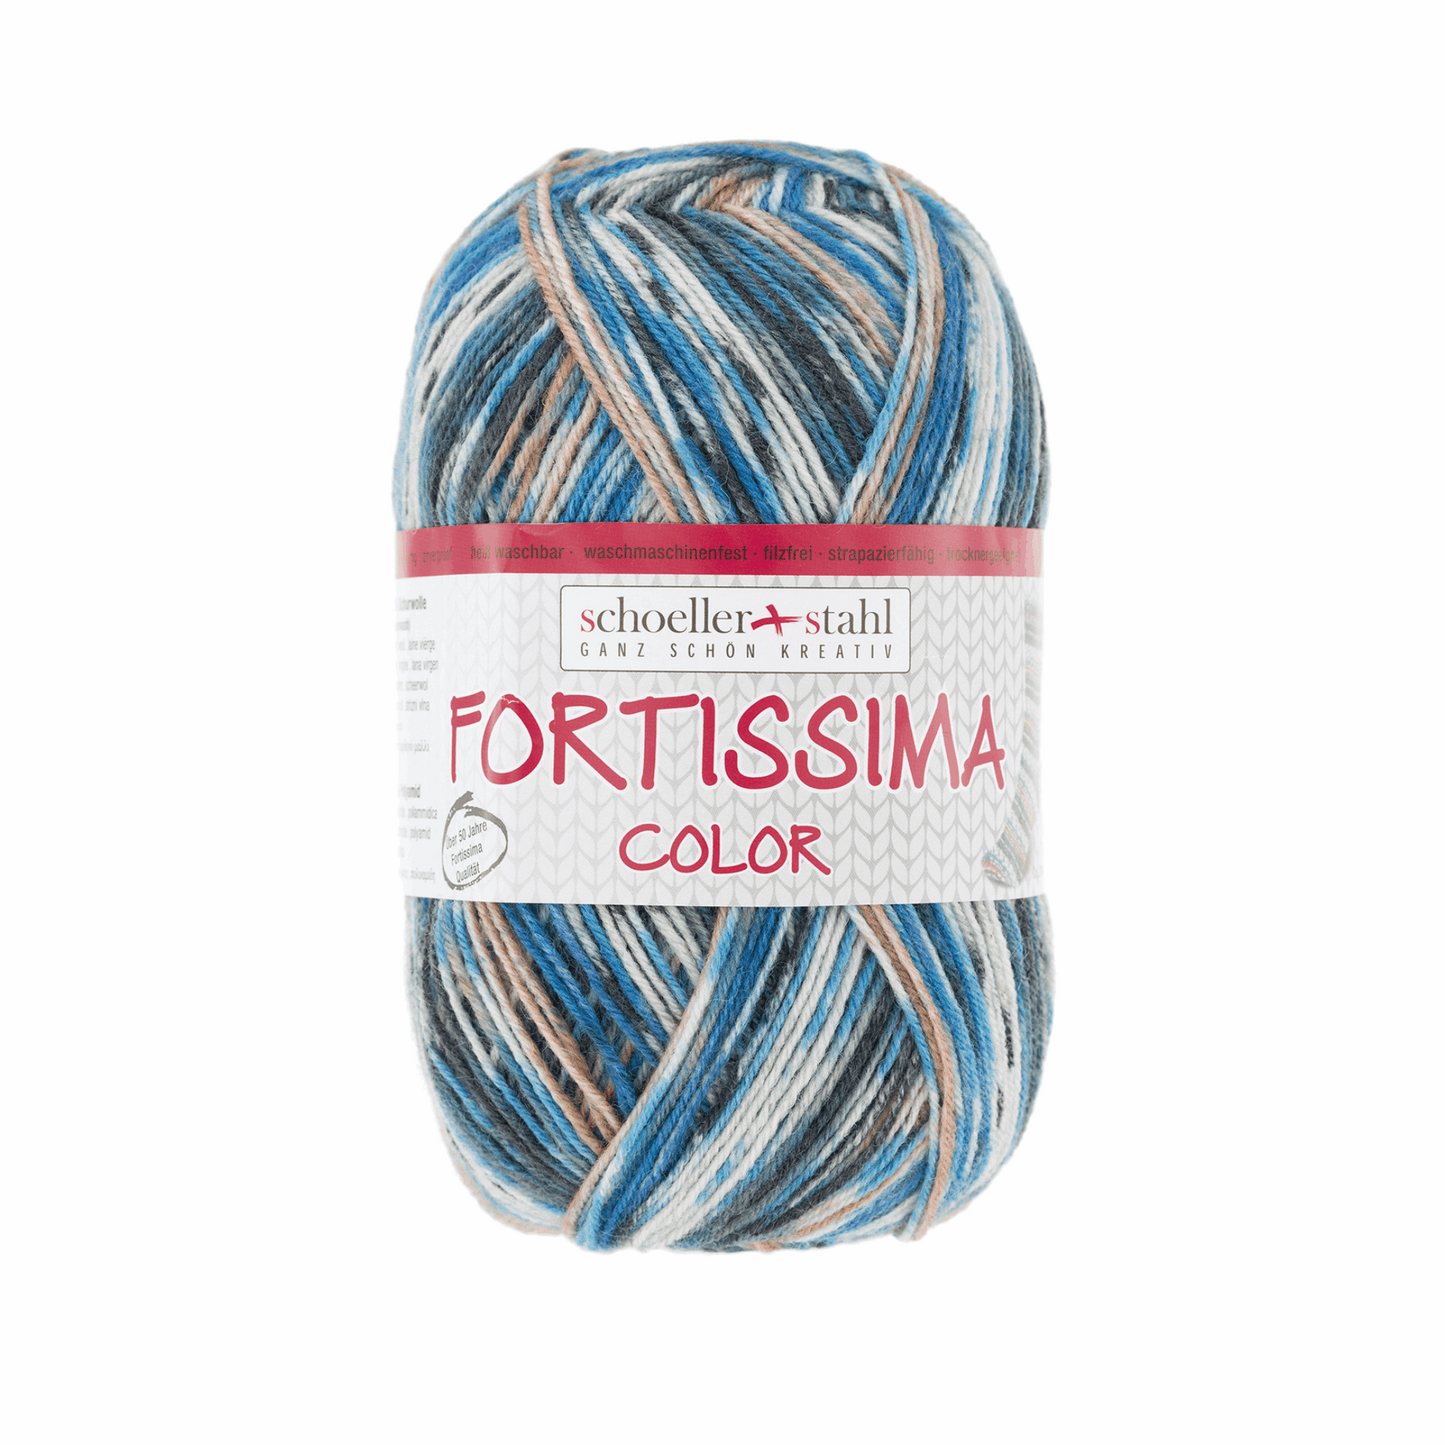 Fortissima socka 4fädrig color, 90028, Farbe 2490, eichelheher